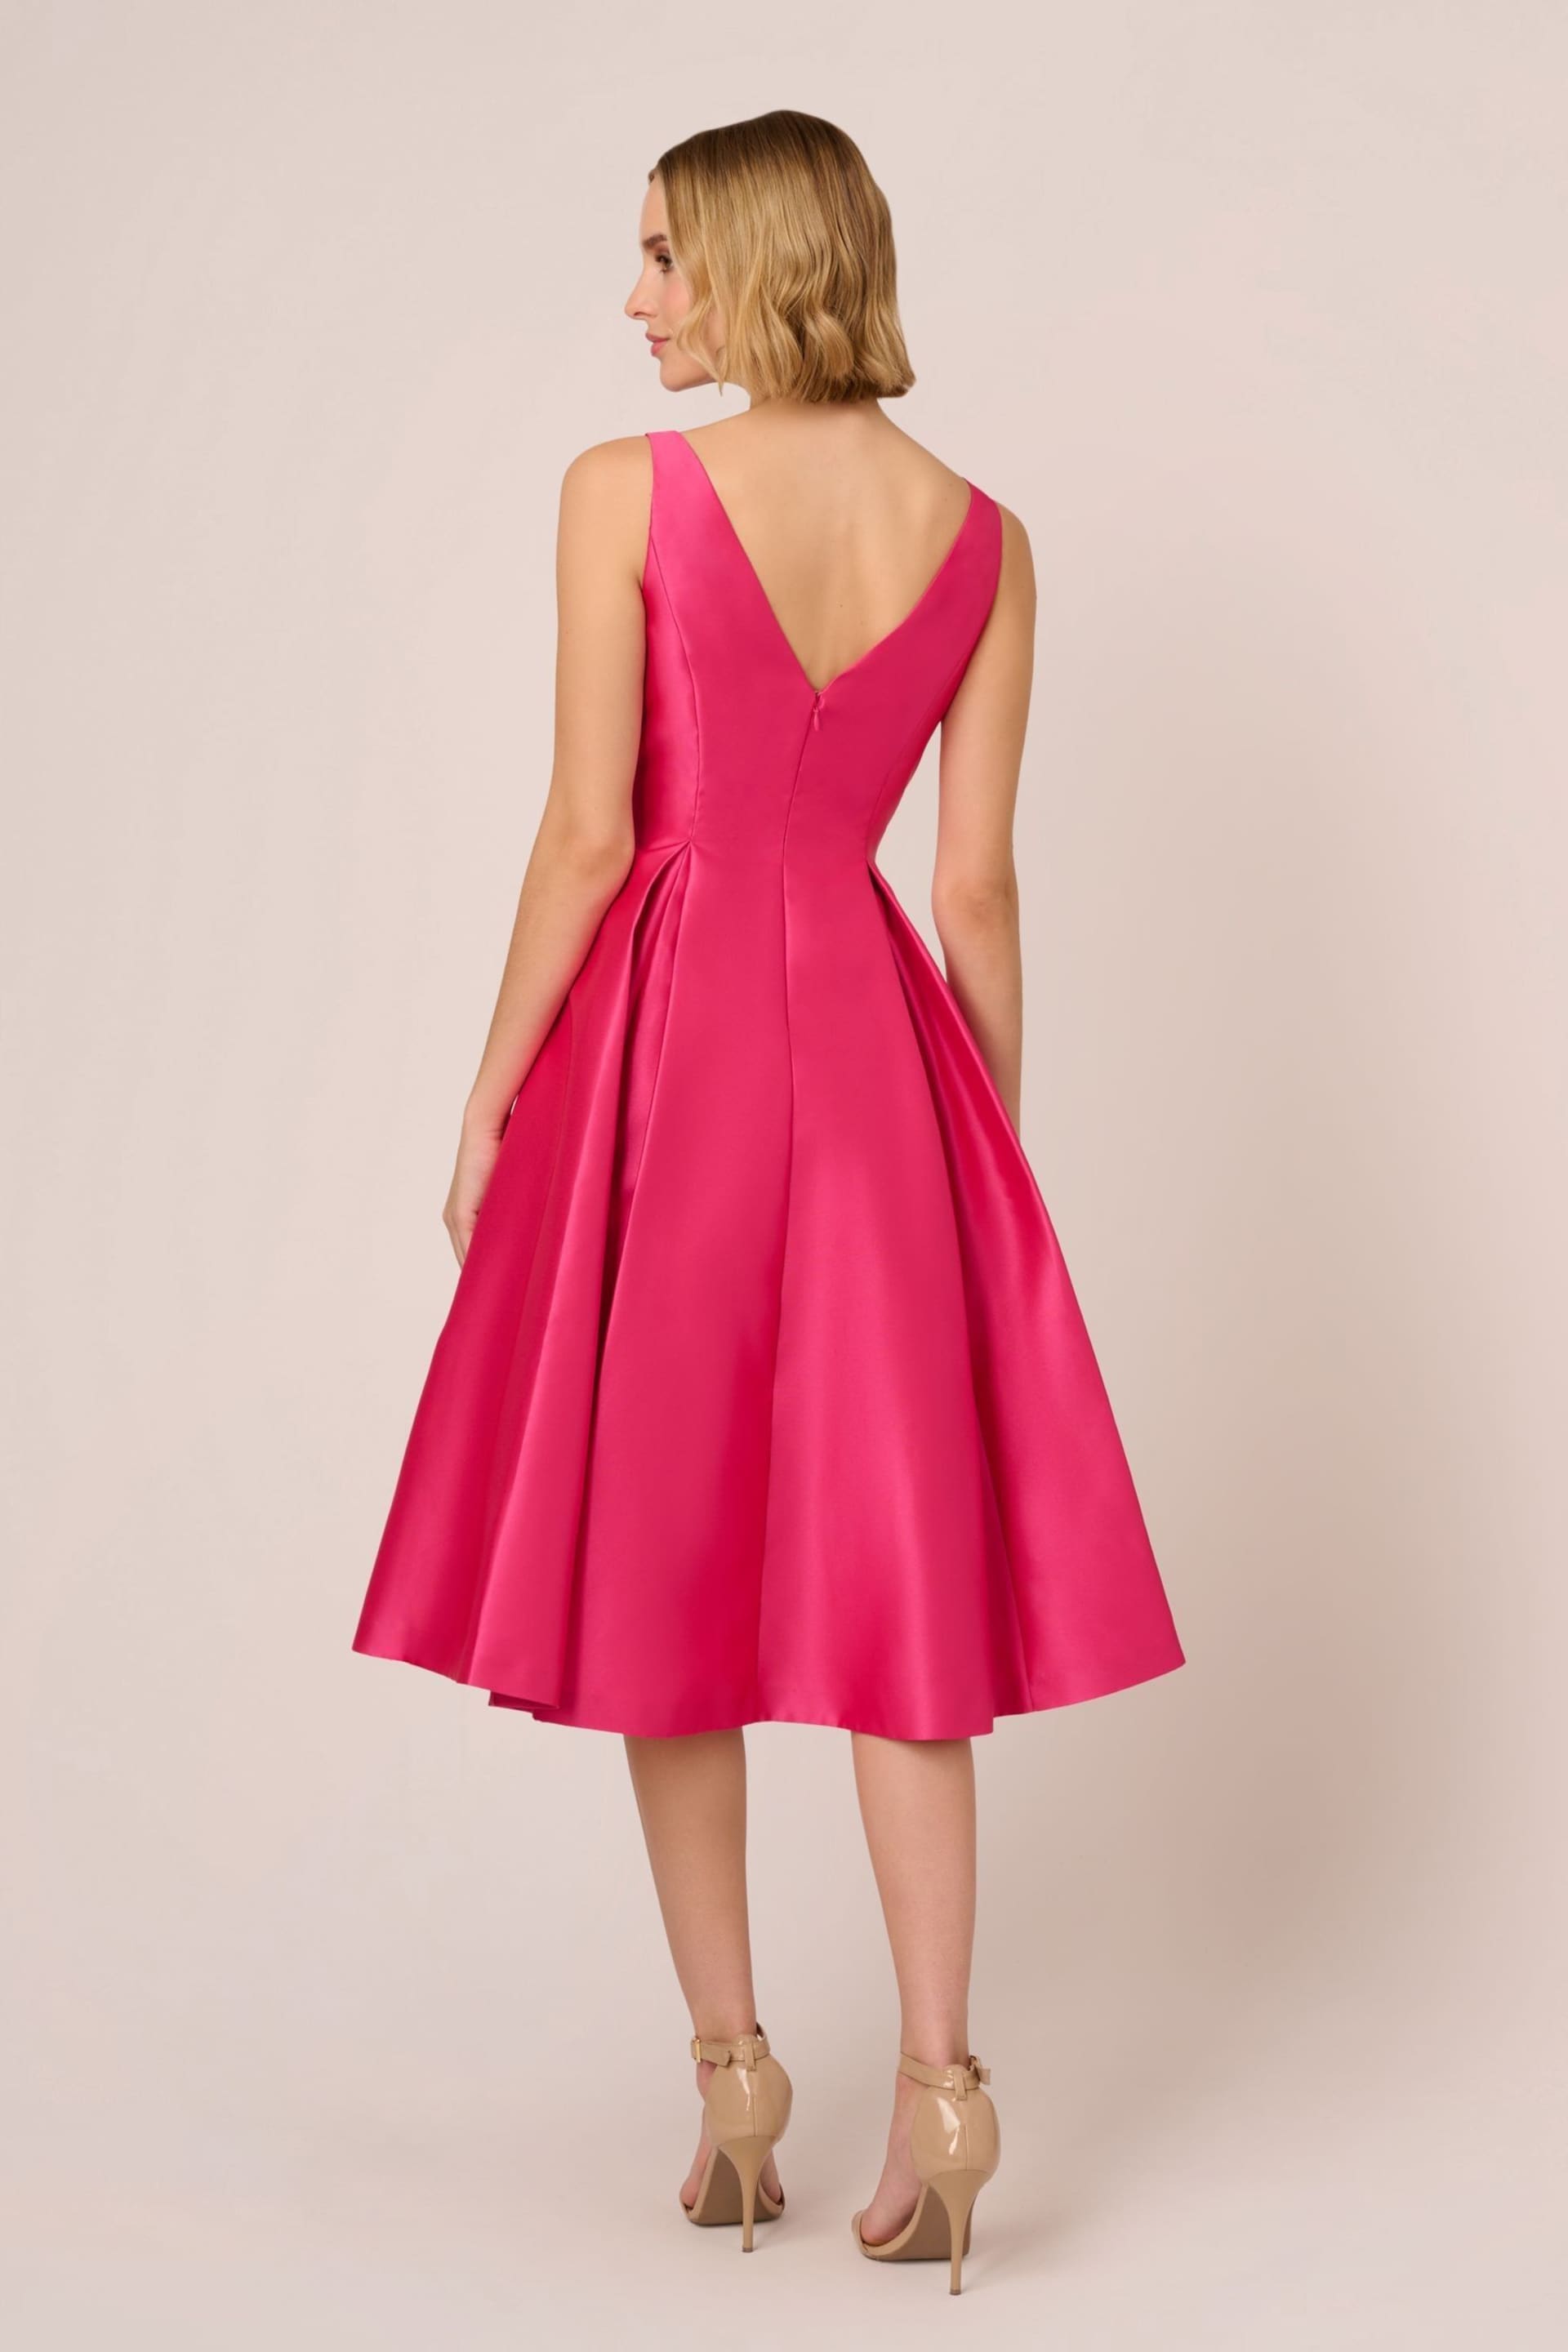 Adrianna Papell Pink Sleeveless Tea Length Dress - Image 2 of 7